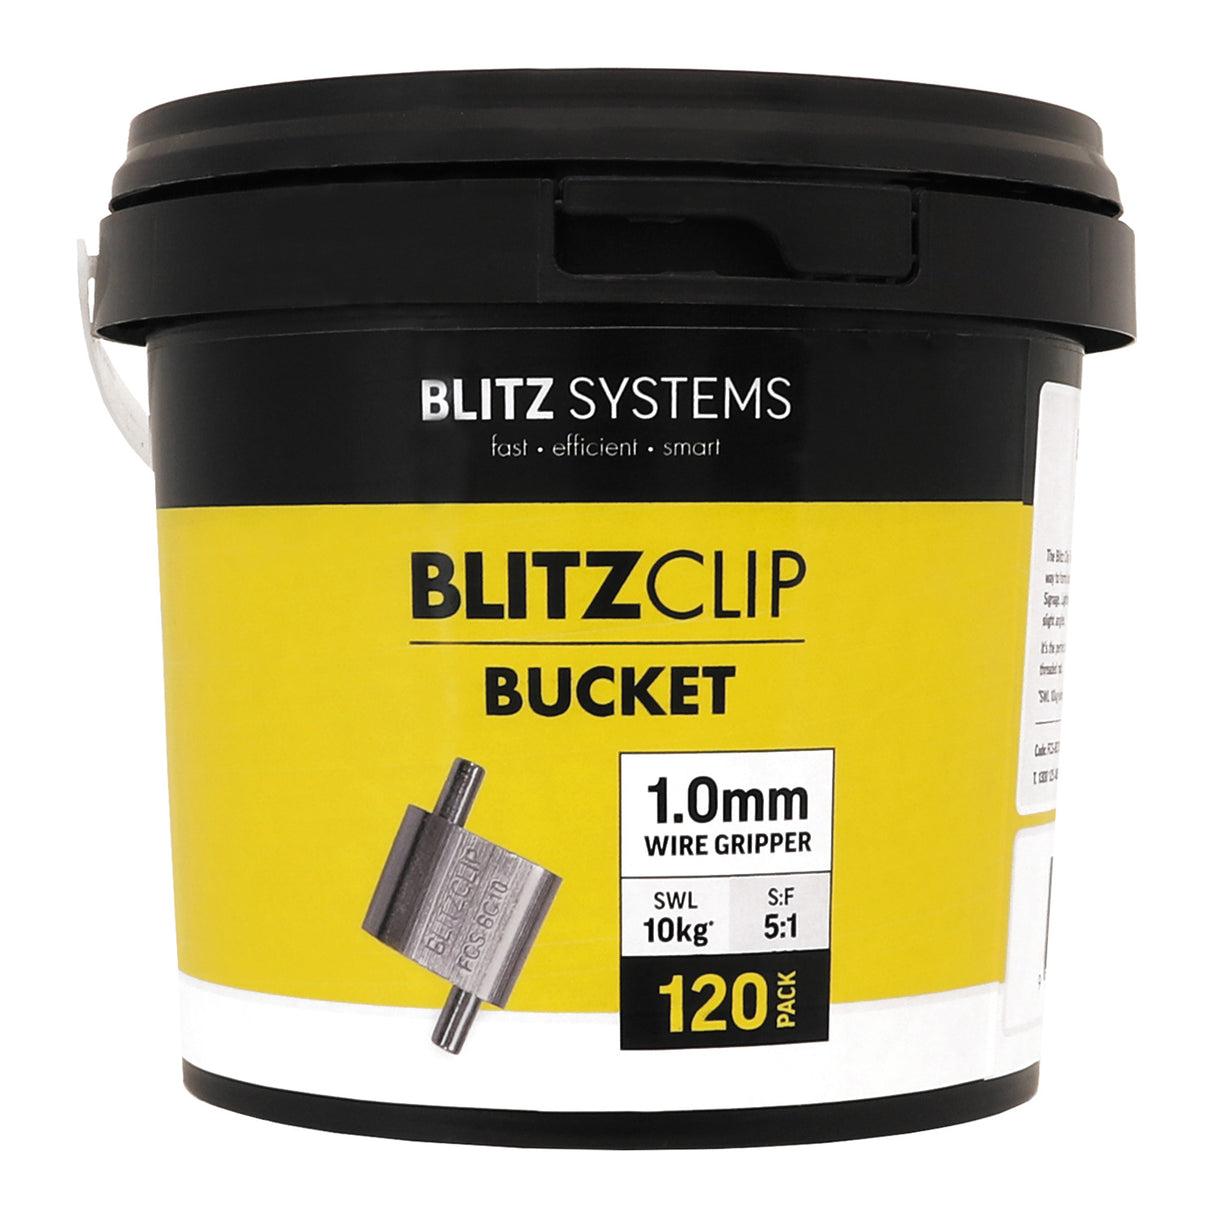 BLITZCLIP Bucket 1.0mm Wire Gripper x 120 Pcs